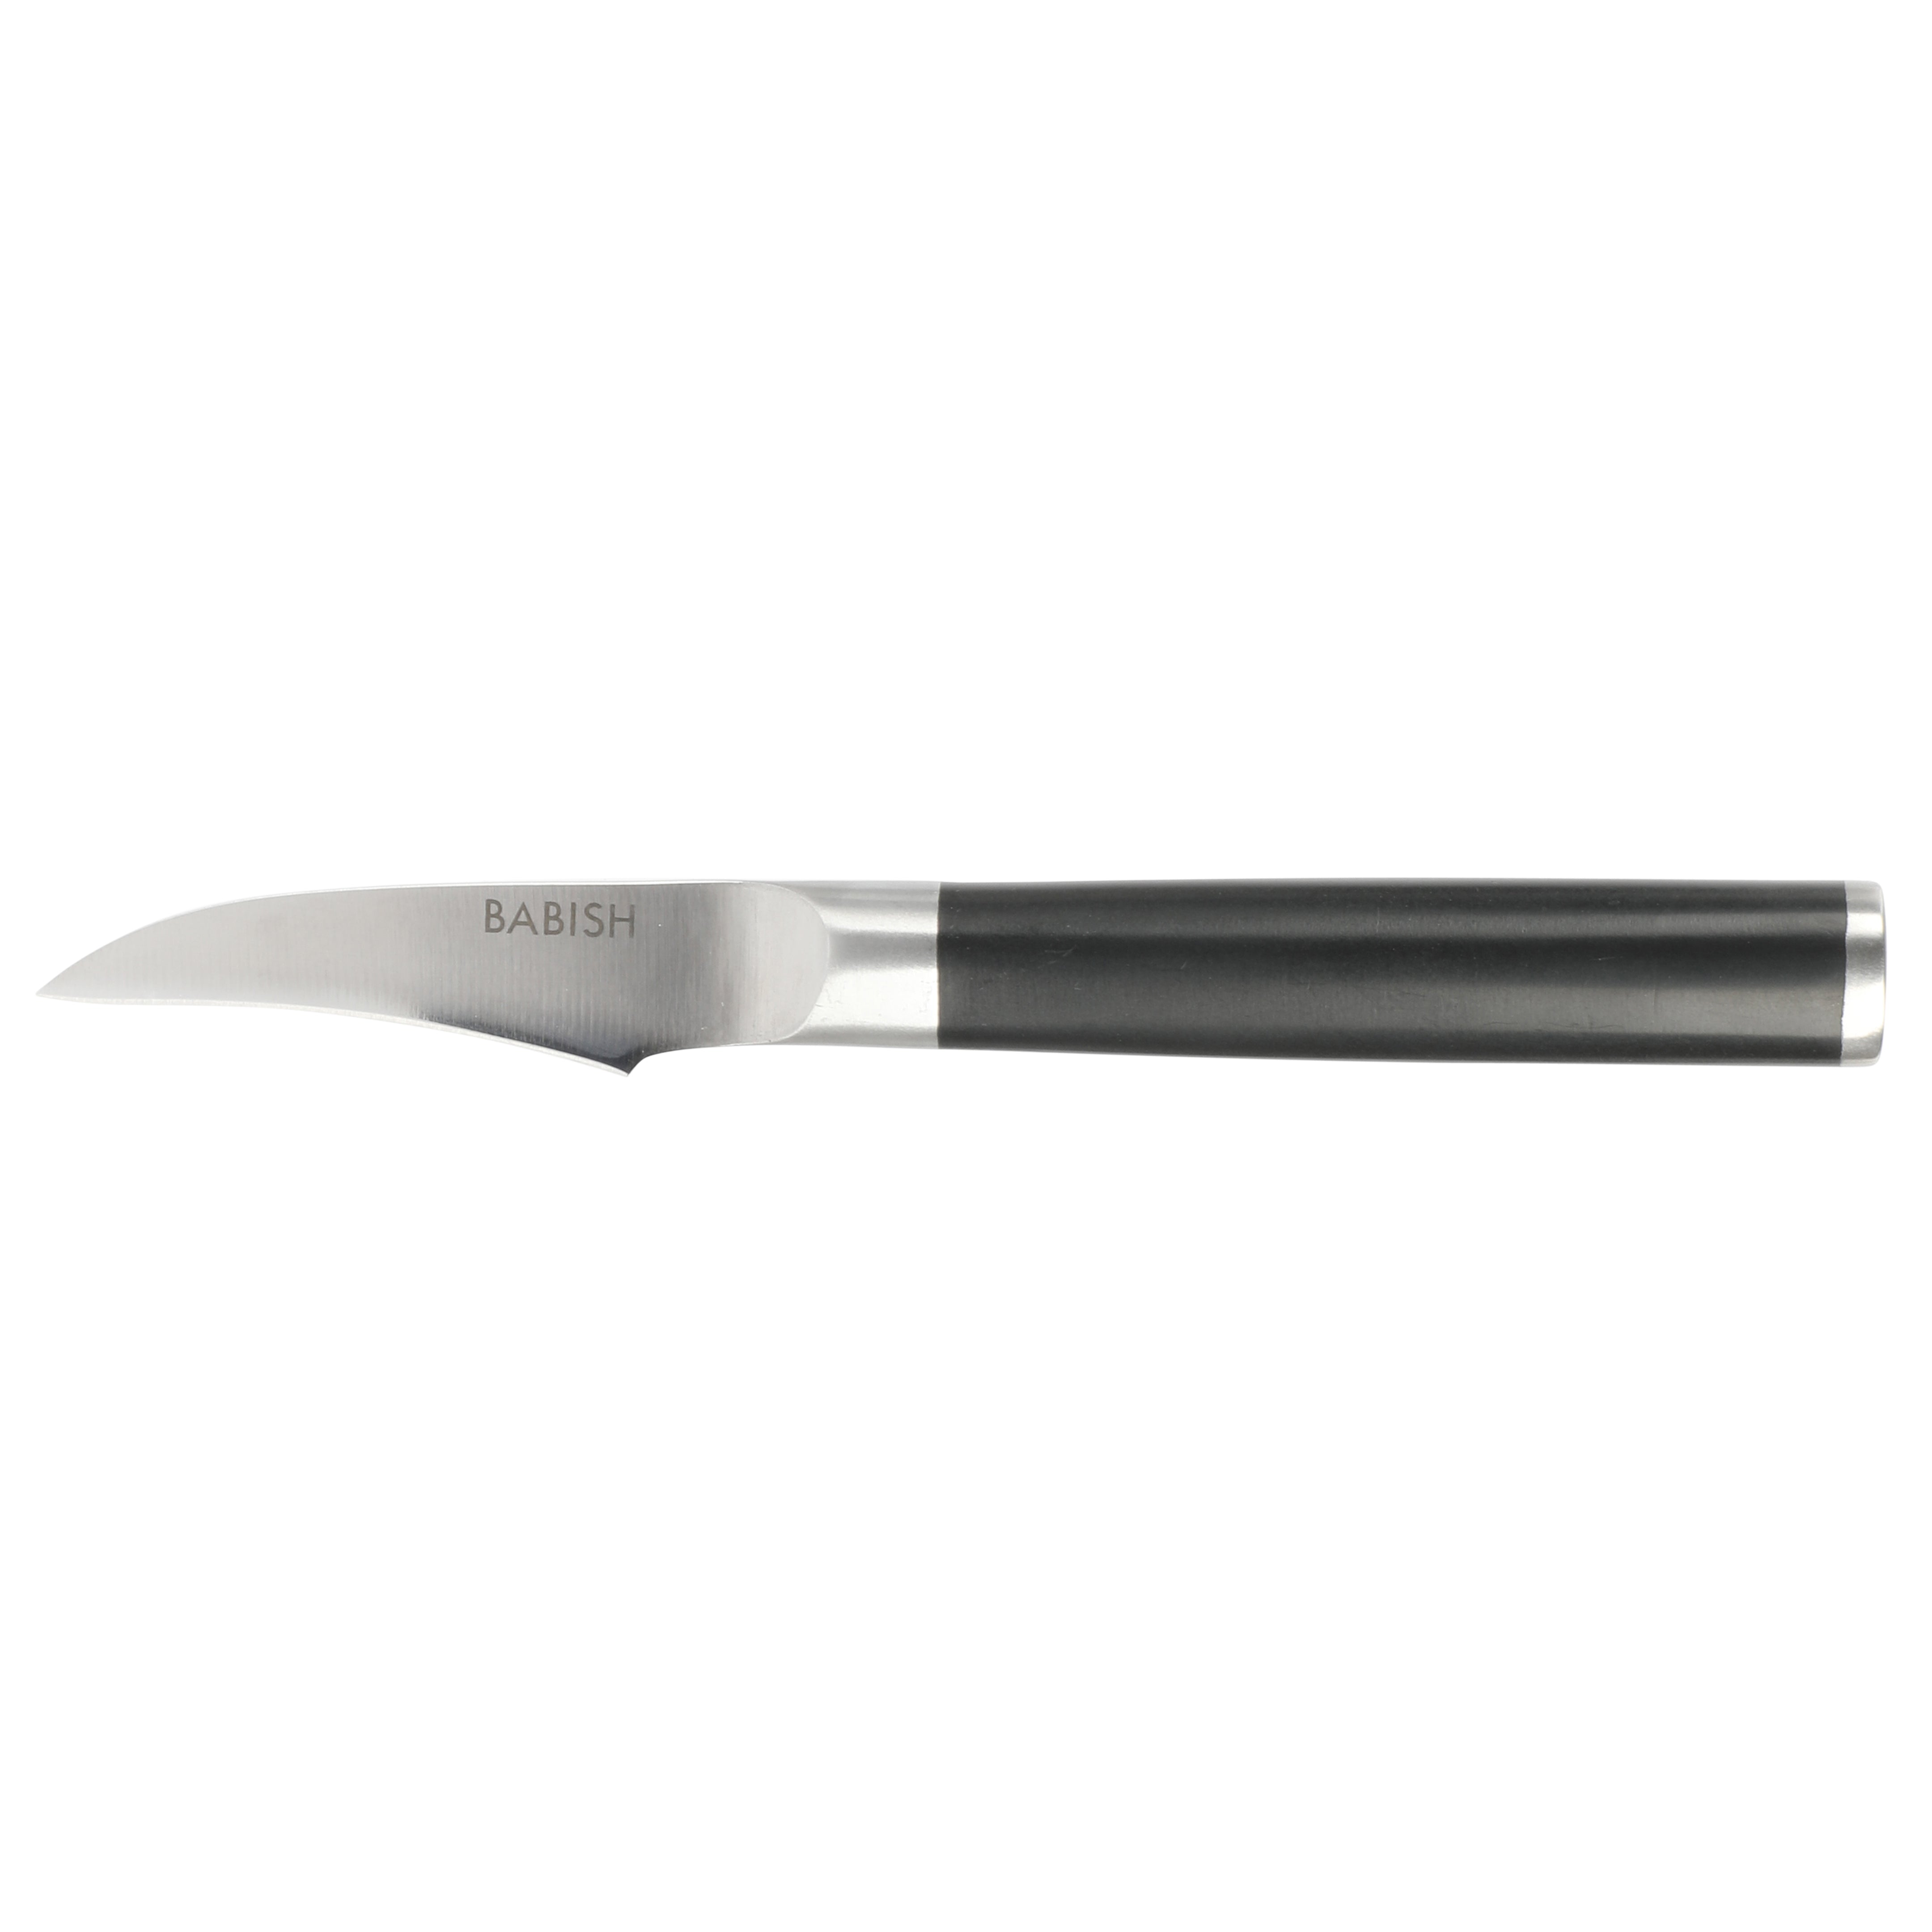 Babish High-Carbon 1.4116 German Steel 2.5" Bird's Beak Knife